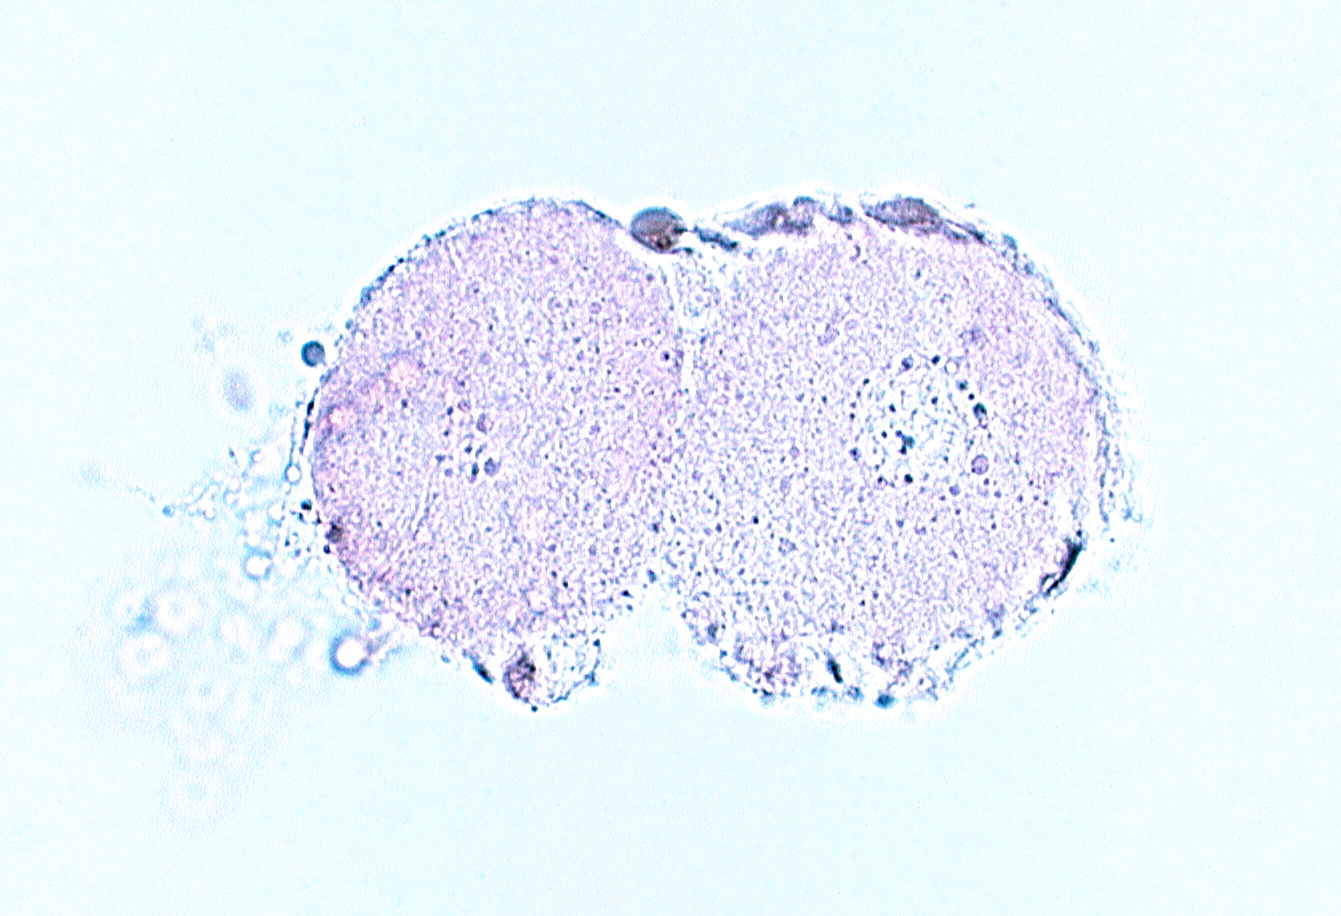 blastomere cytoplasm, cytoplasmic and nuclear material between blastomeres and zona pellucida, edge of blastomere nucleus, polar body, zona pellucida